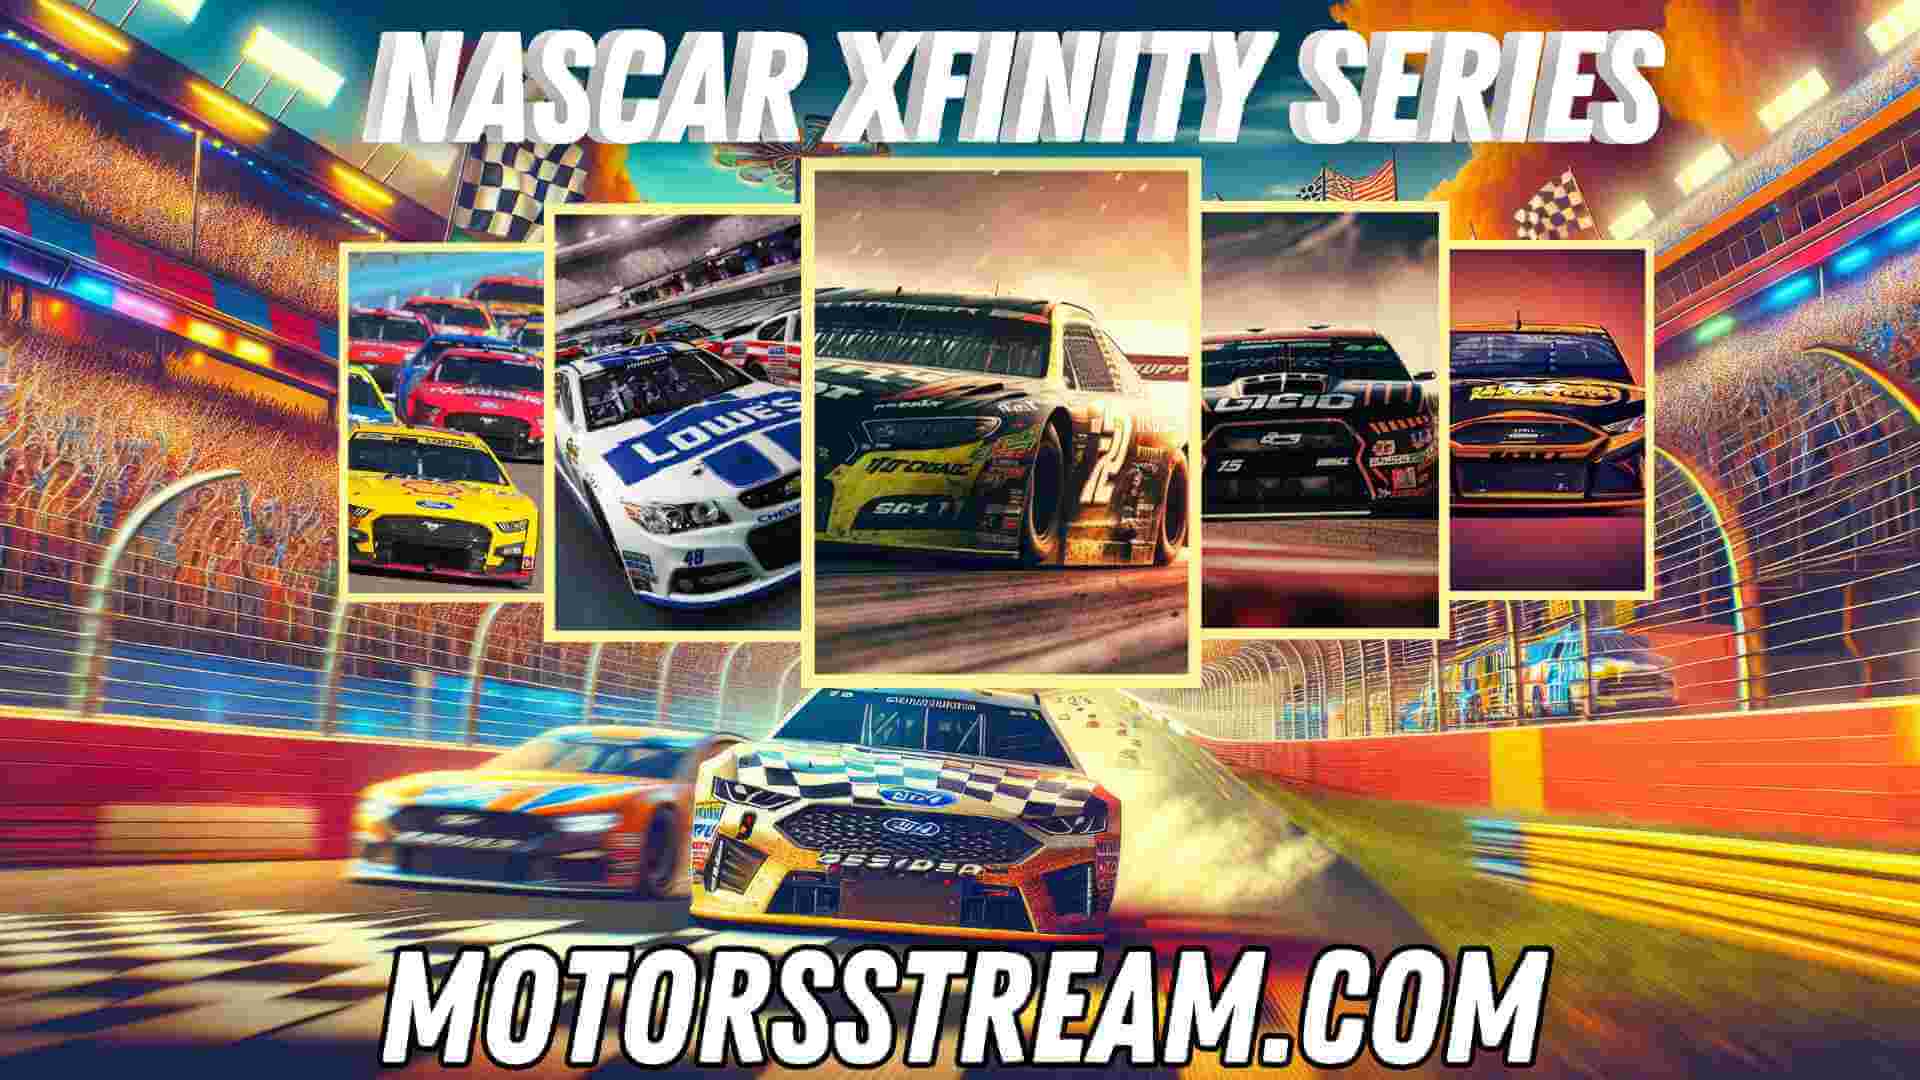 NASCAR Xfinity Series 2017 Schedule